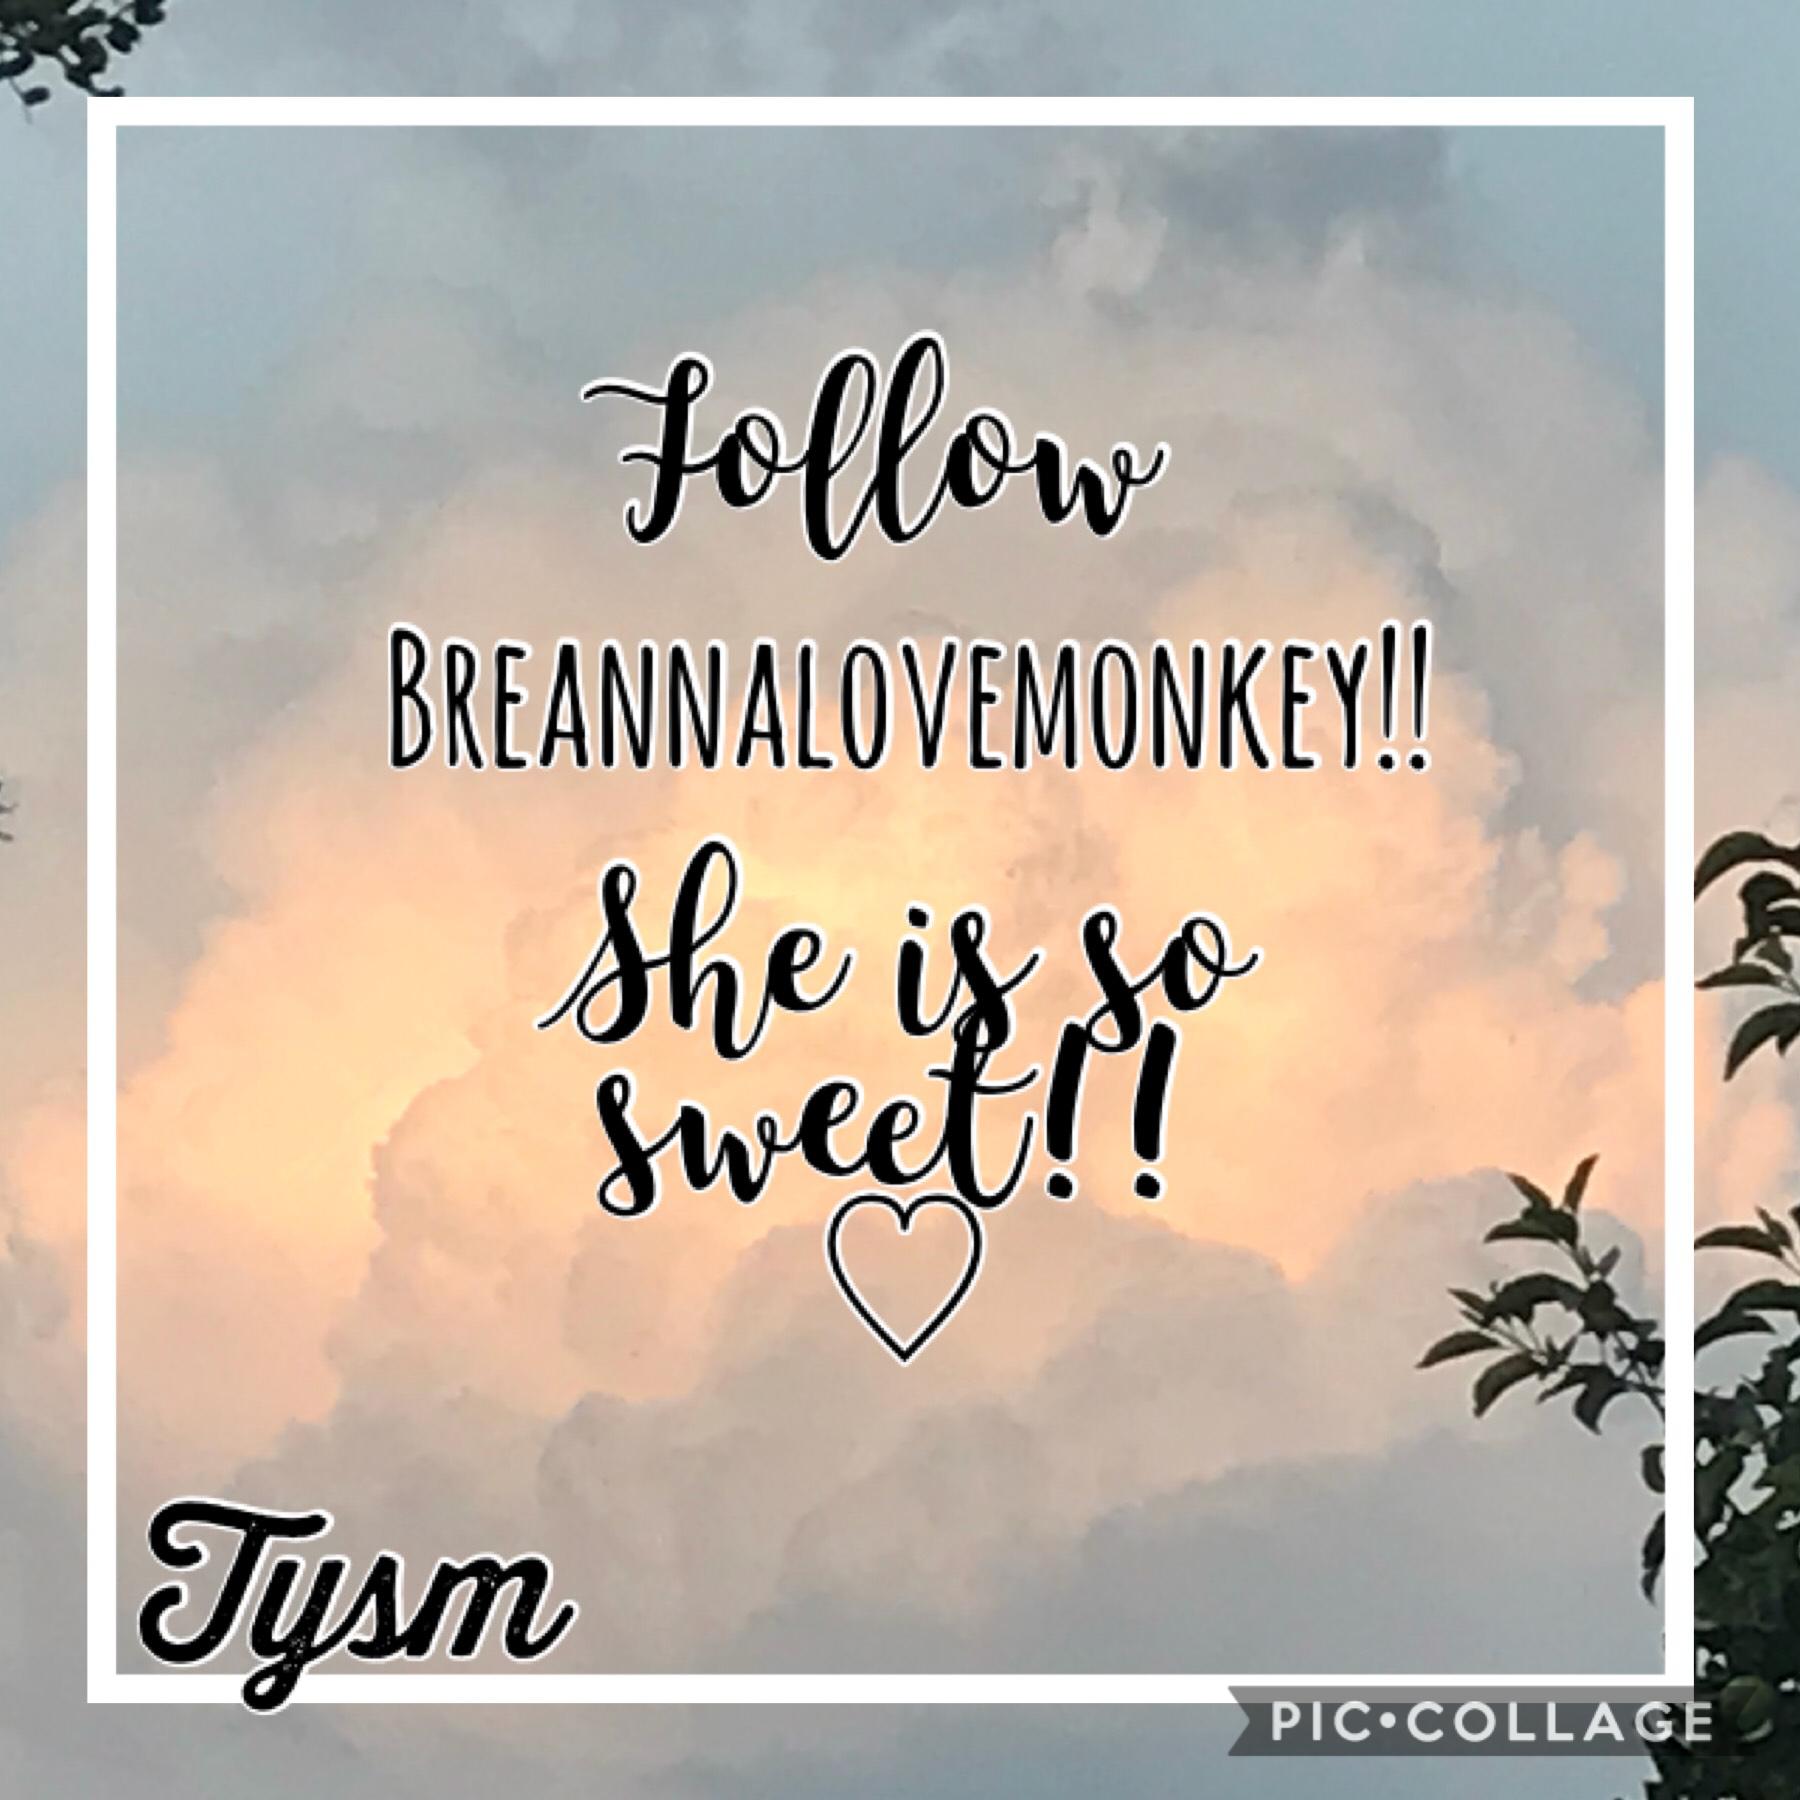 #followbreannalovemonkey